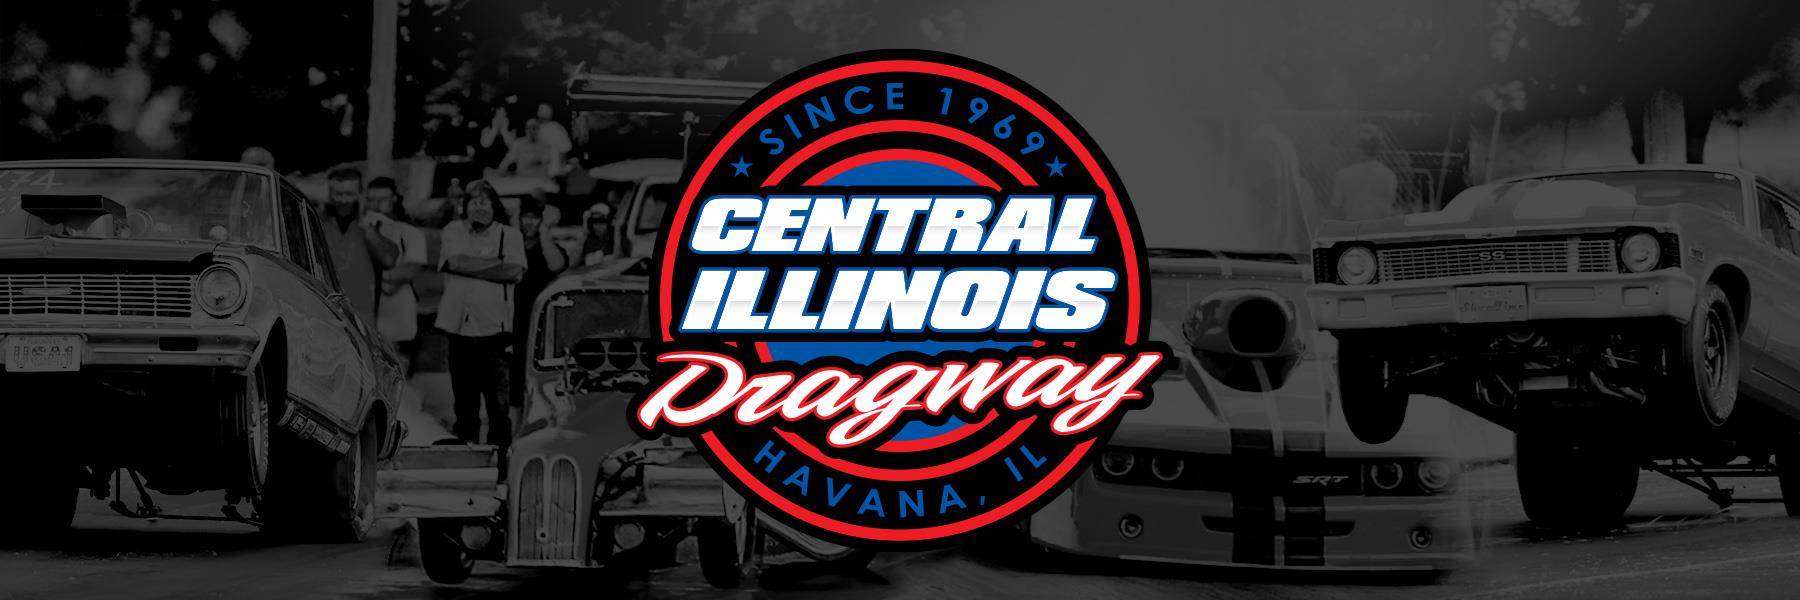 6/17/2023 - Central Illinois Dragway